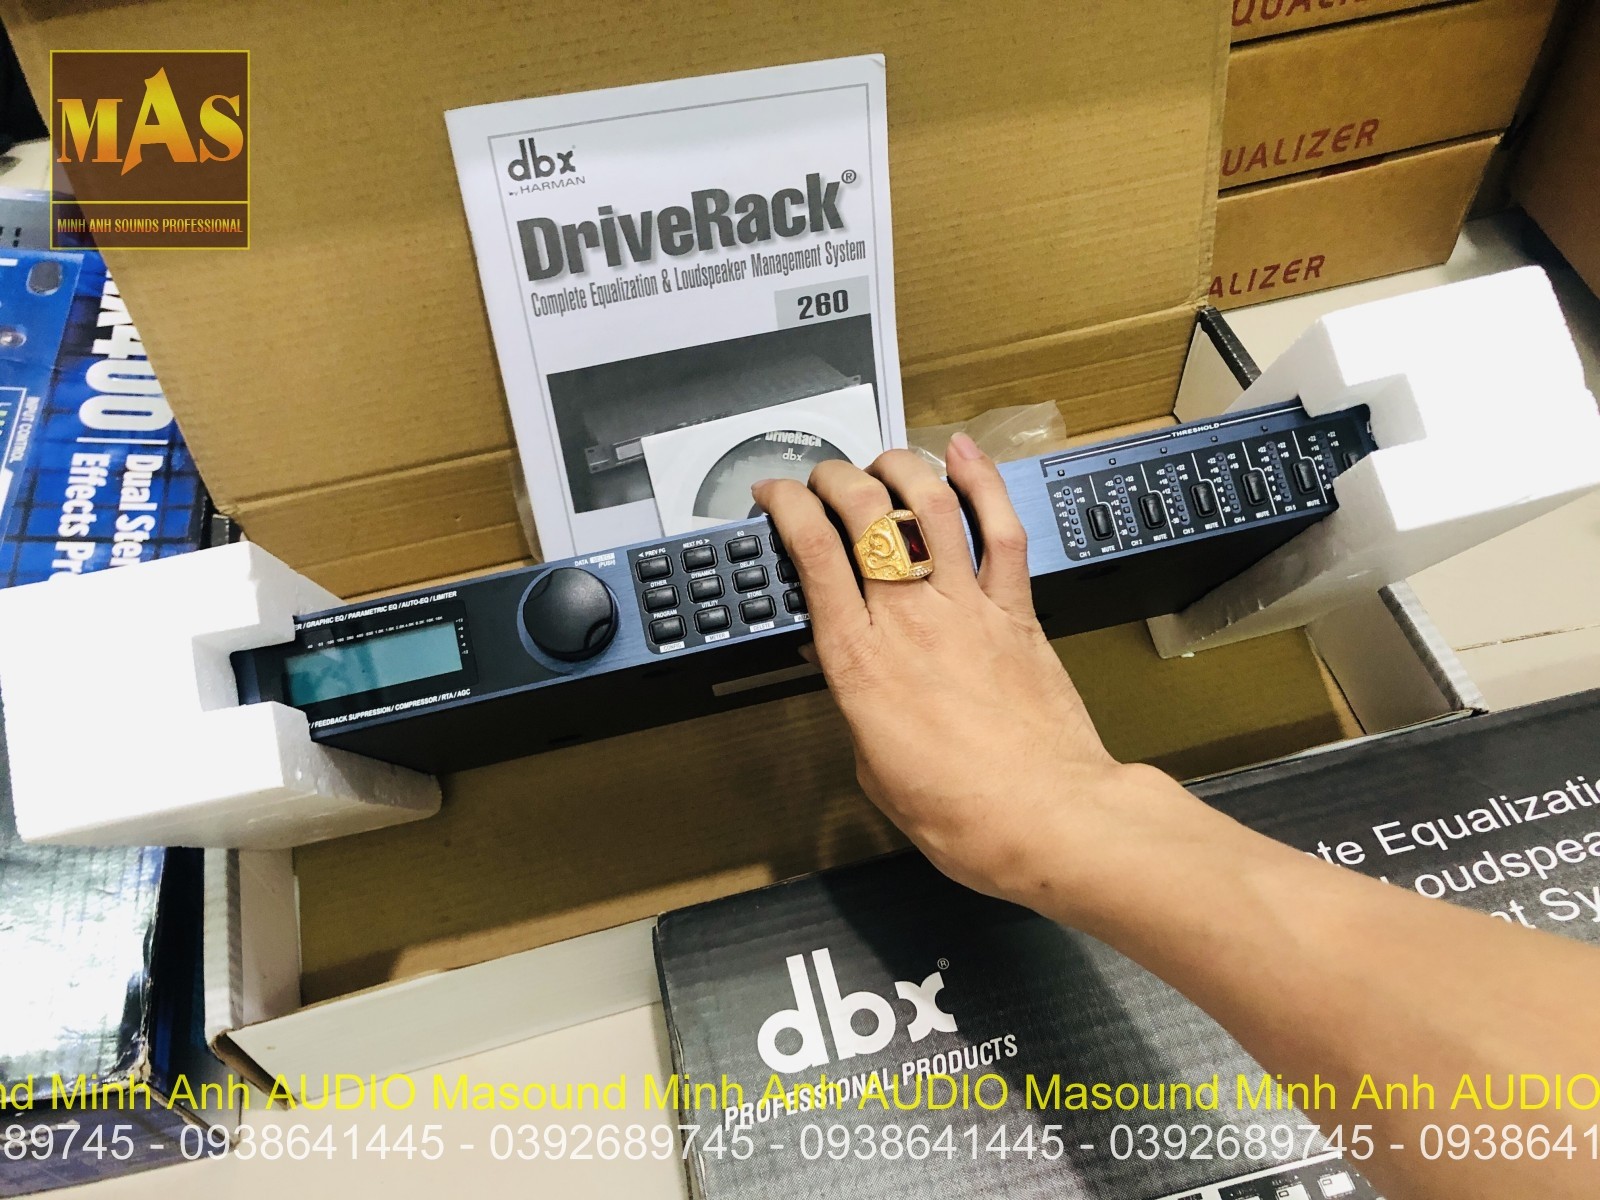 dbx driverack pa260